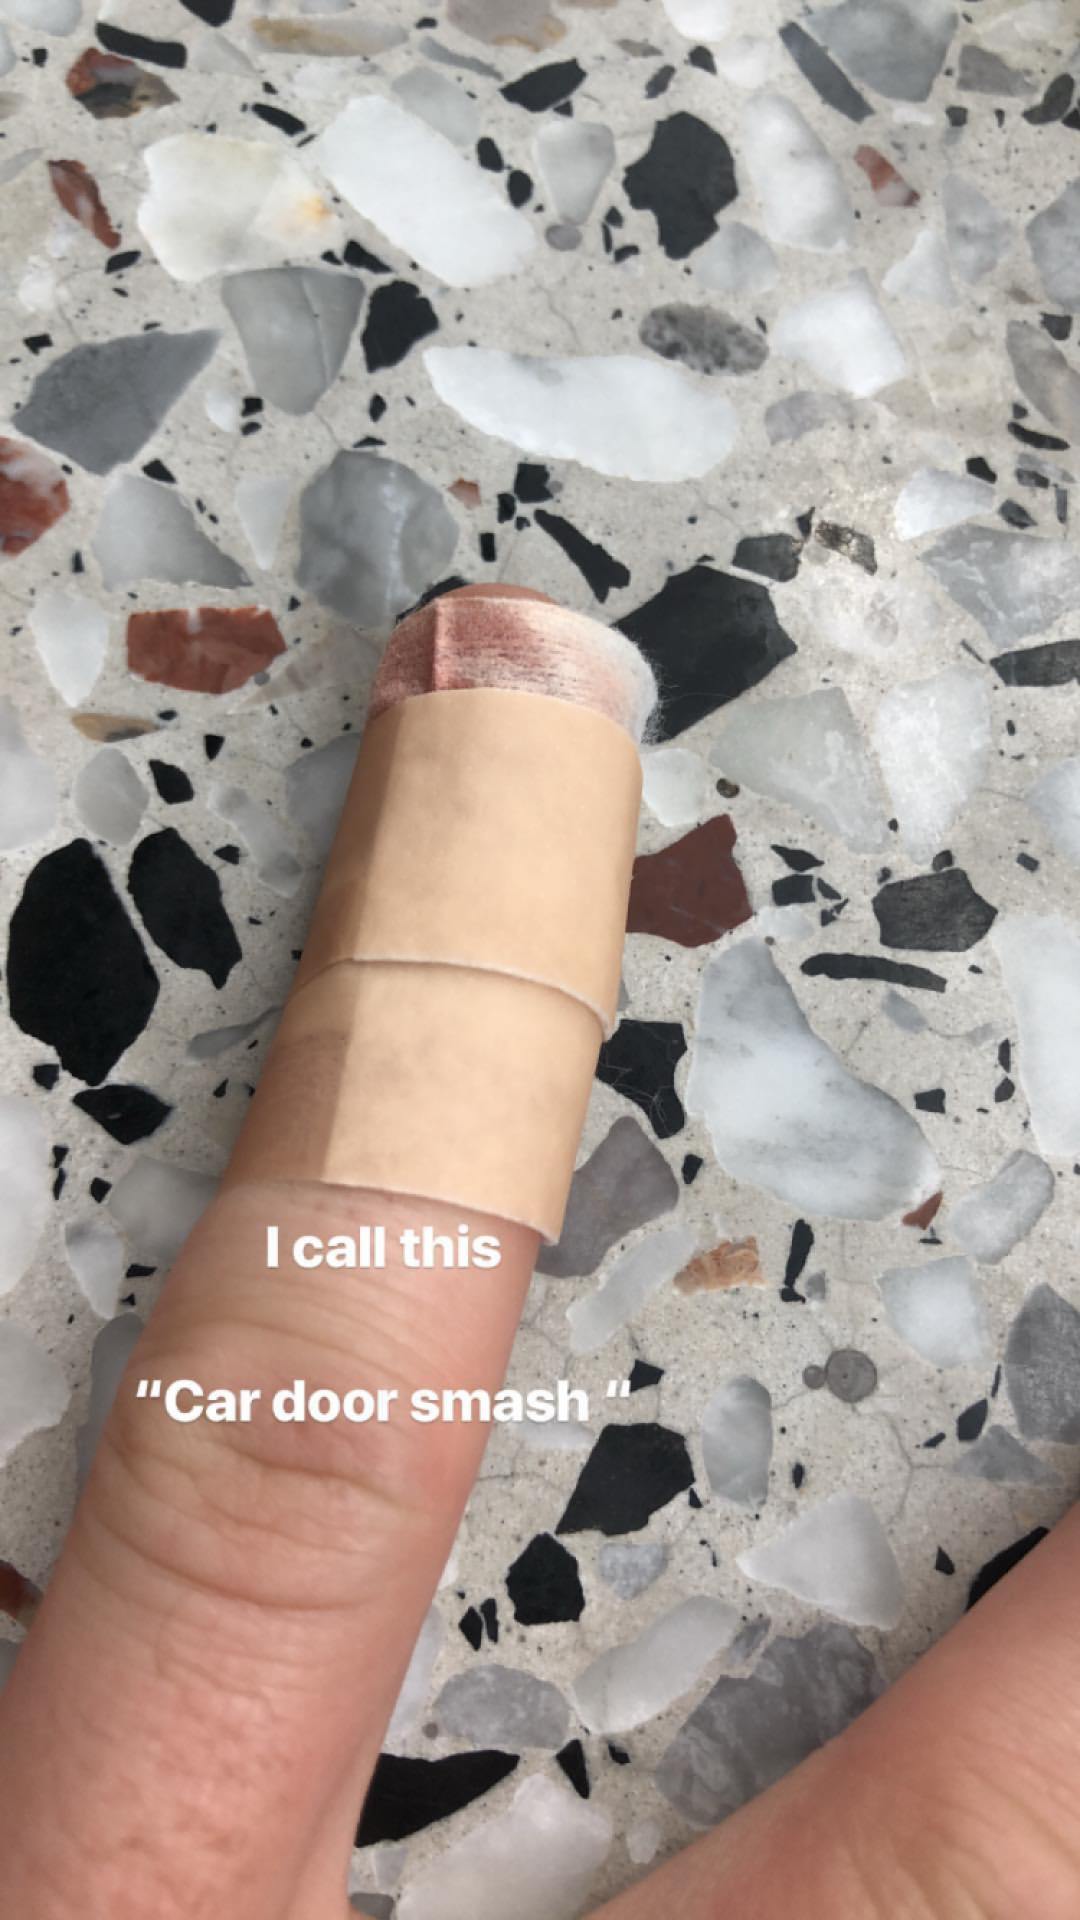 Niall Horan Posts Injury Pic On Instagram After Smashing Finger